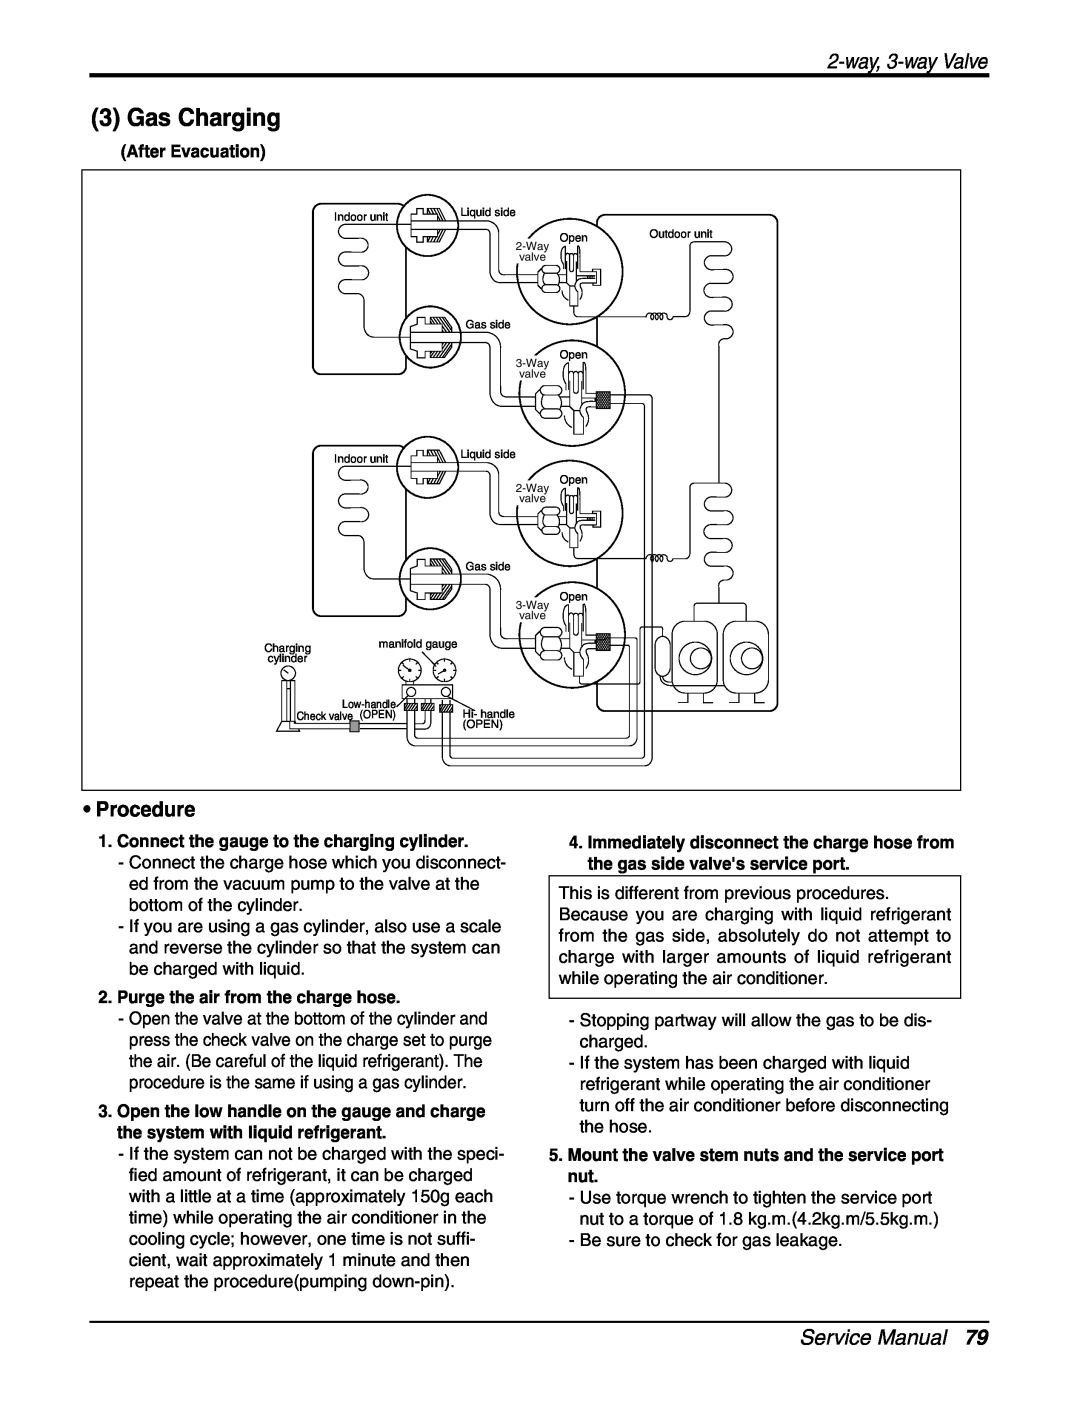 LG Electronics AMNH123DEA0 (LMN120HE), A2UC243FA0 (LMU240CE) Gas Charging, 2-way, 3-way Valve, Procedure, After Evacuation 